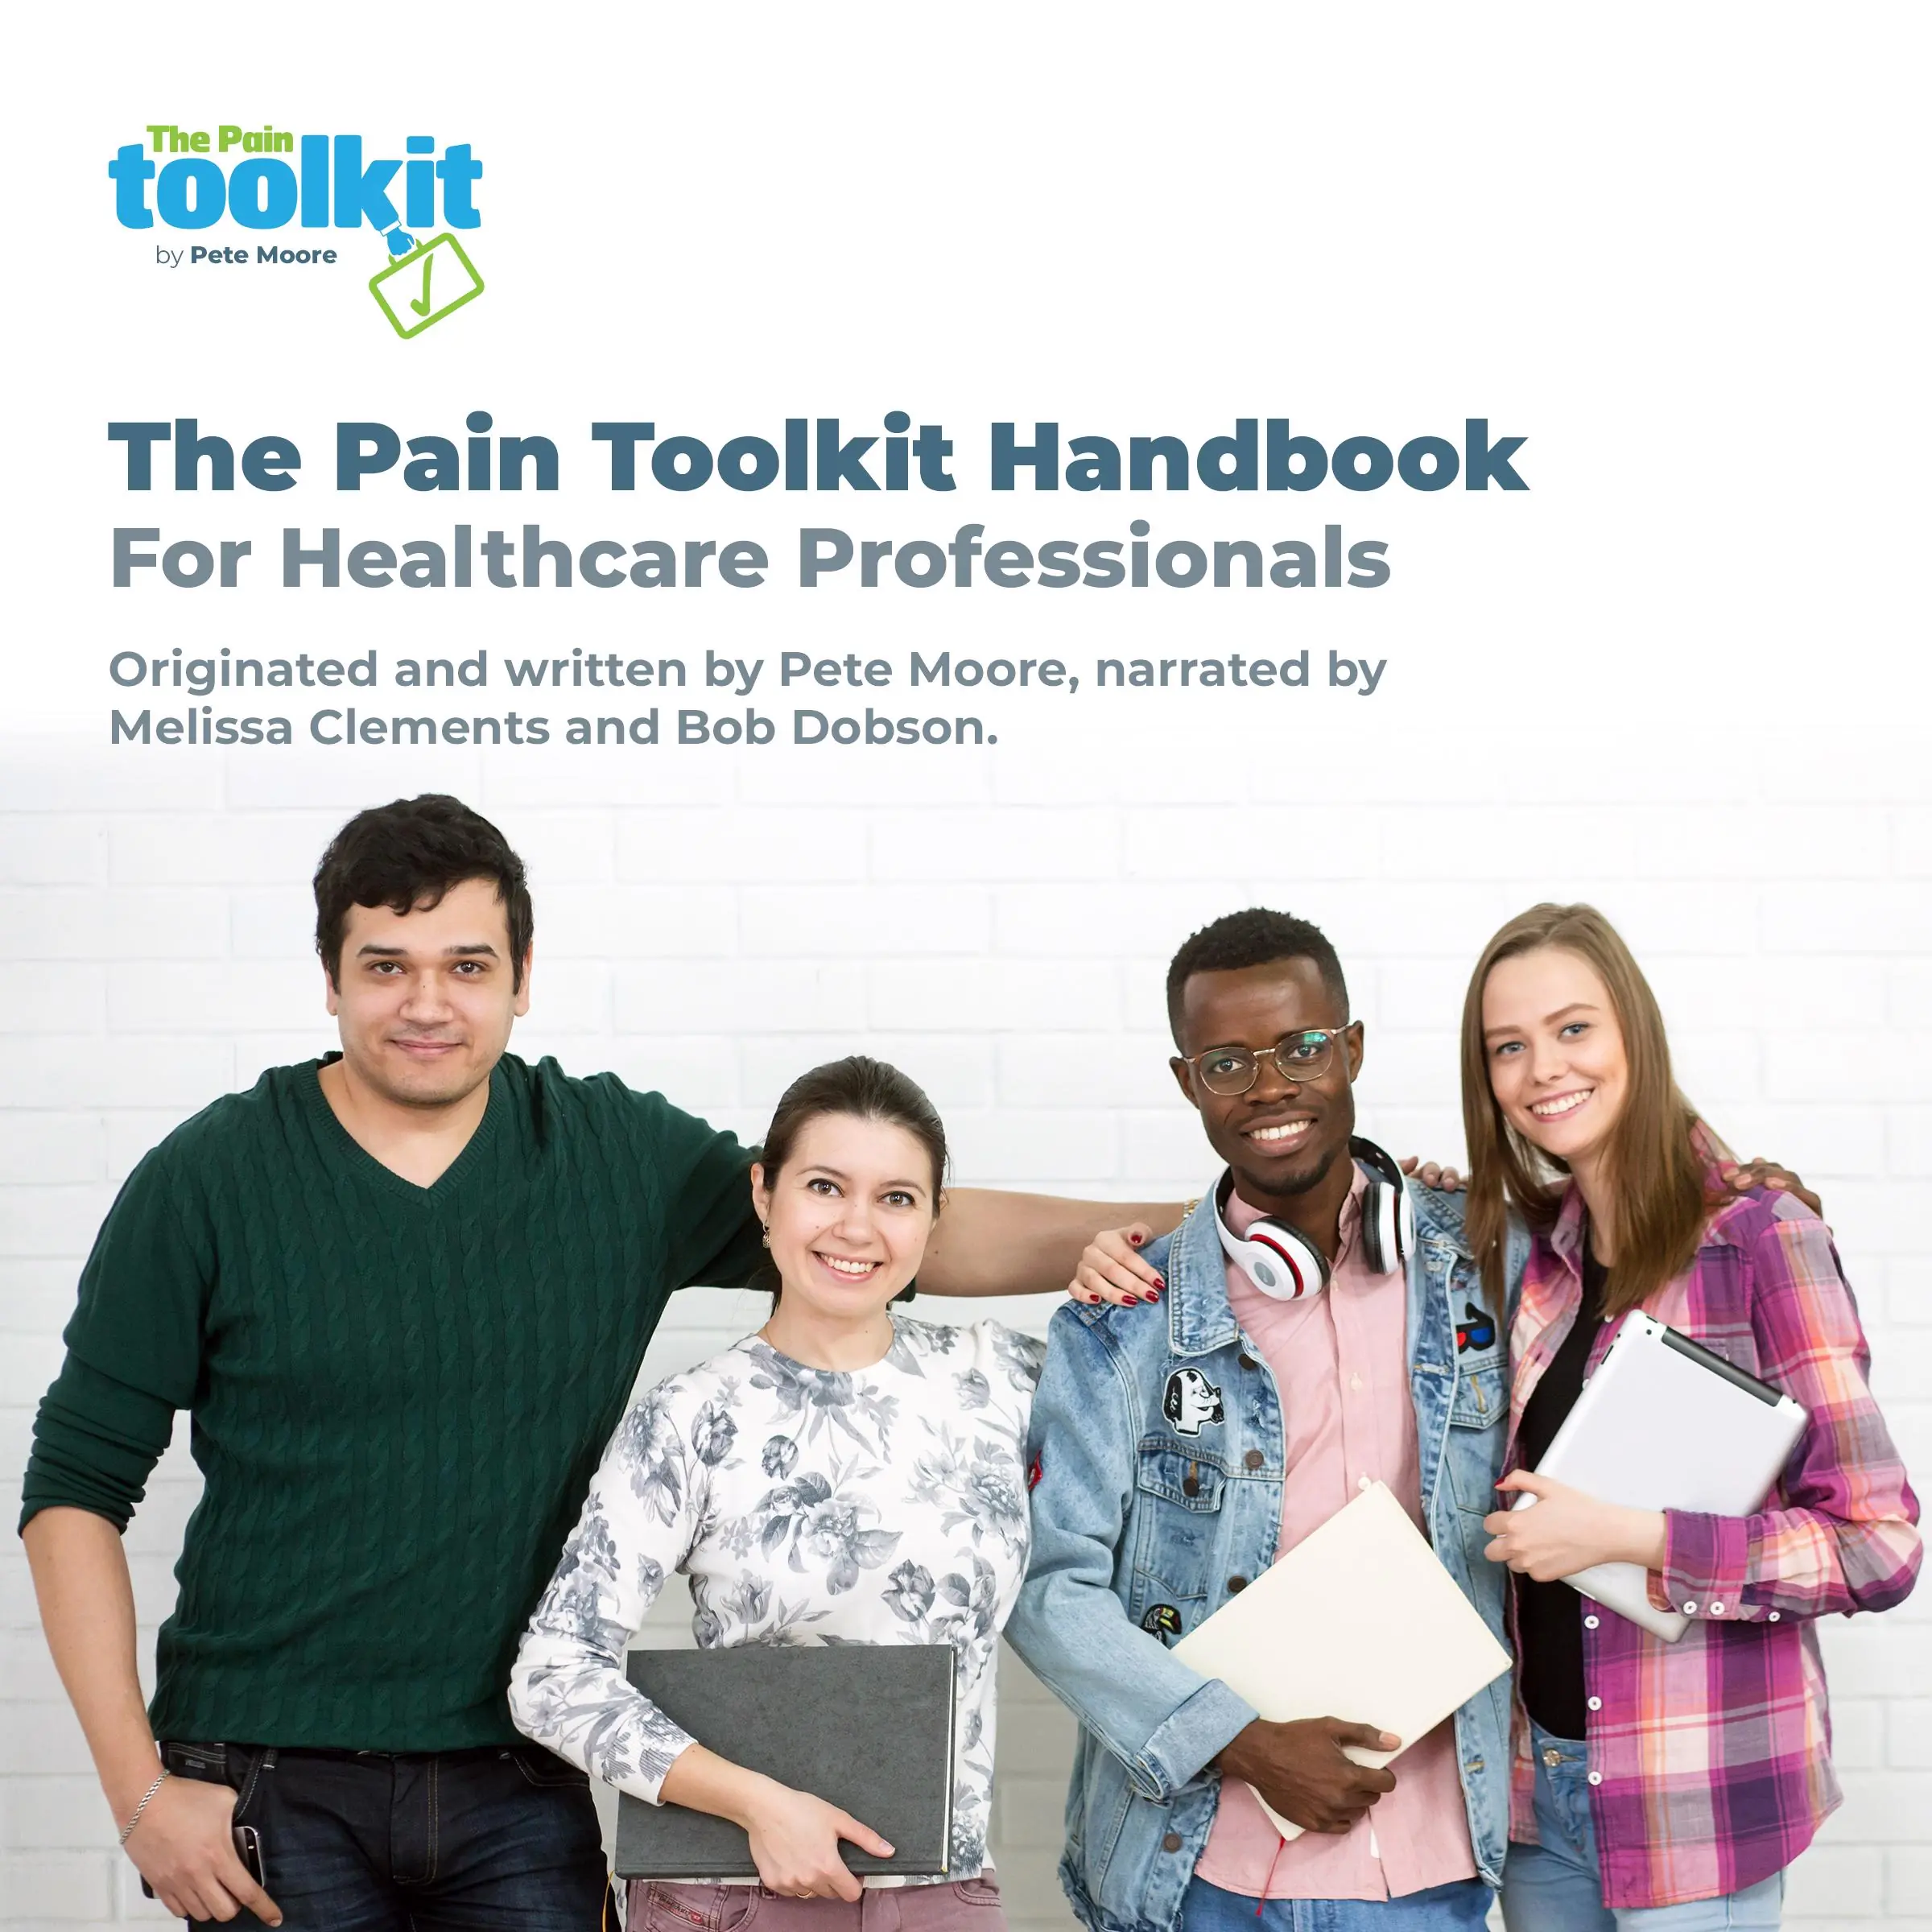 The Pain Toolkit Handbook Audiobook by Pete Moore